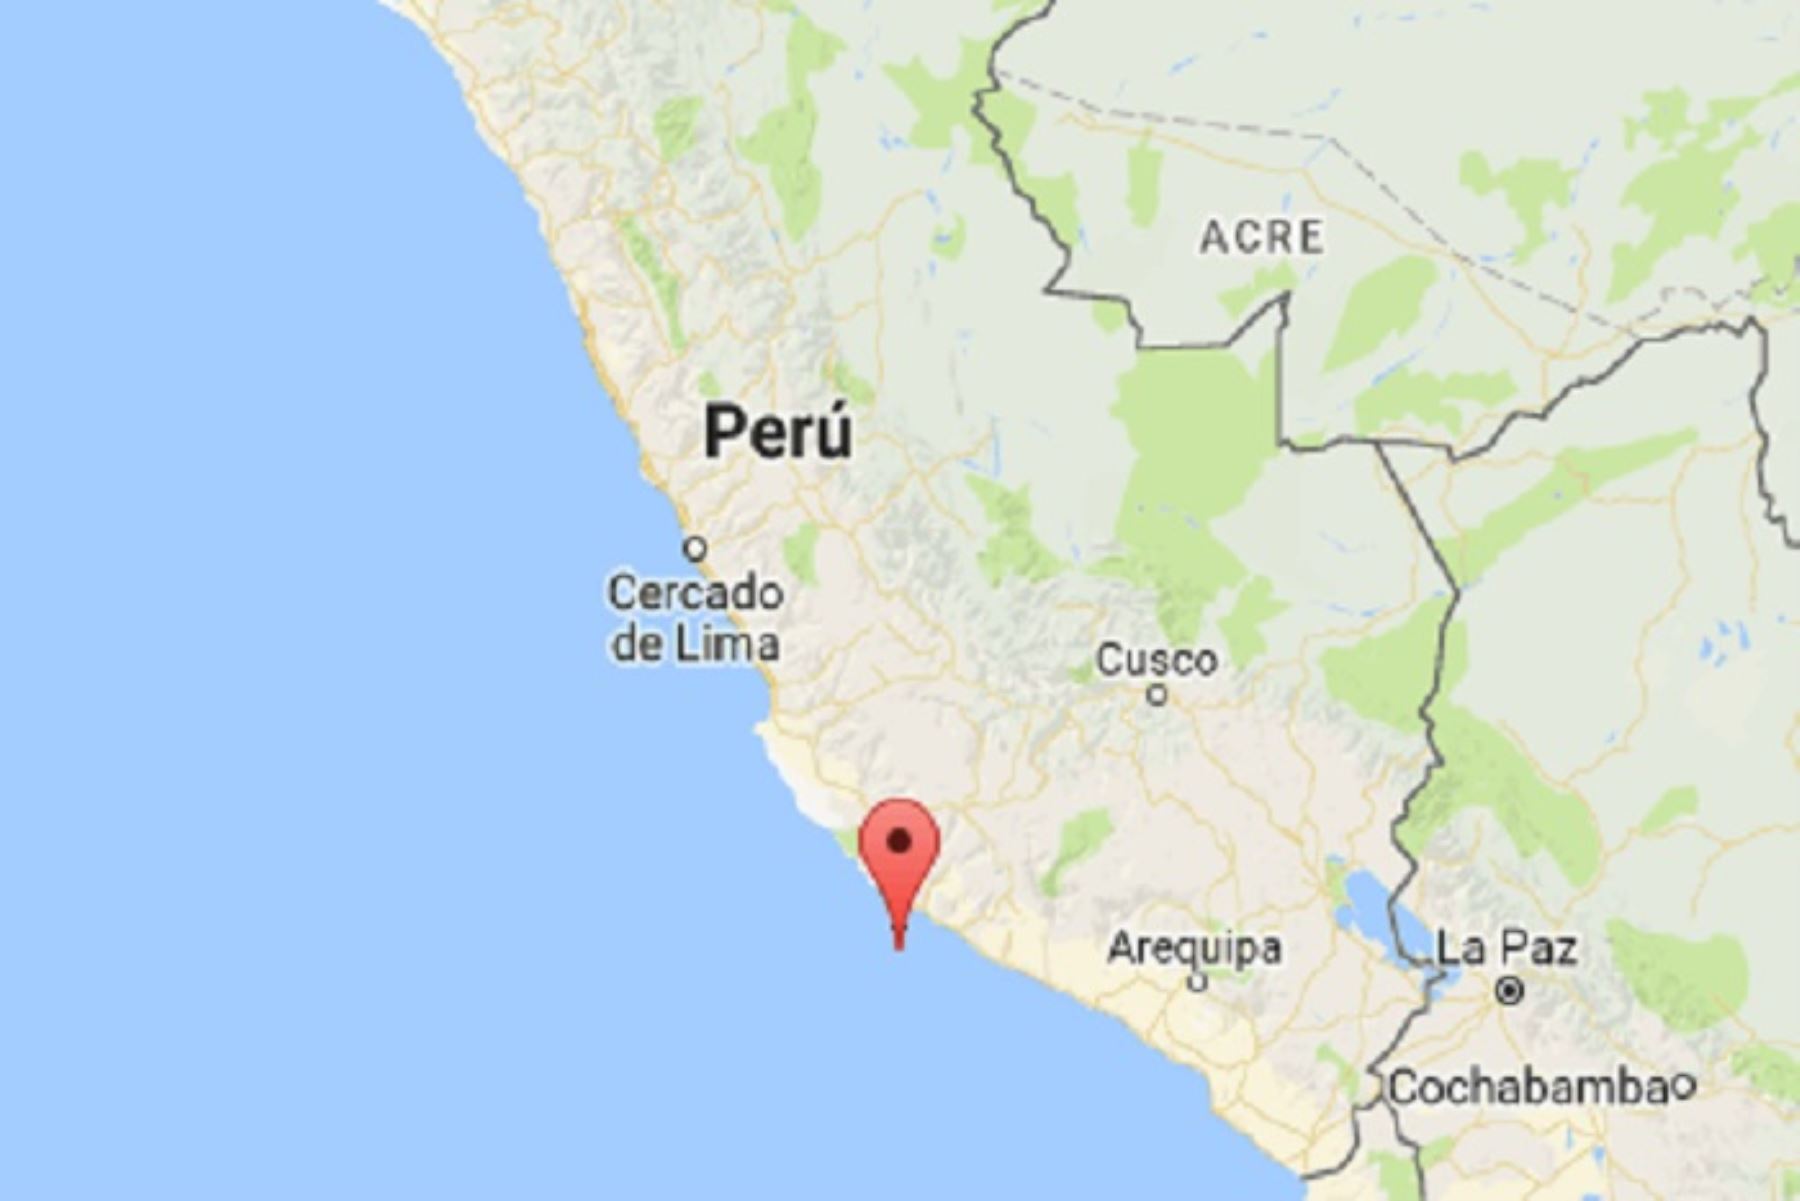 Arequipa soportó hoy un fuerte sismo de magnitud 5.5.